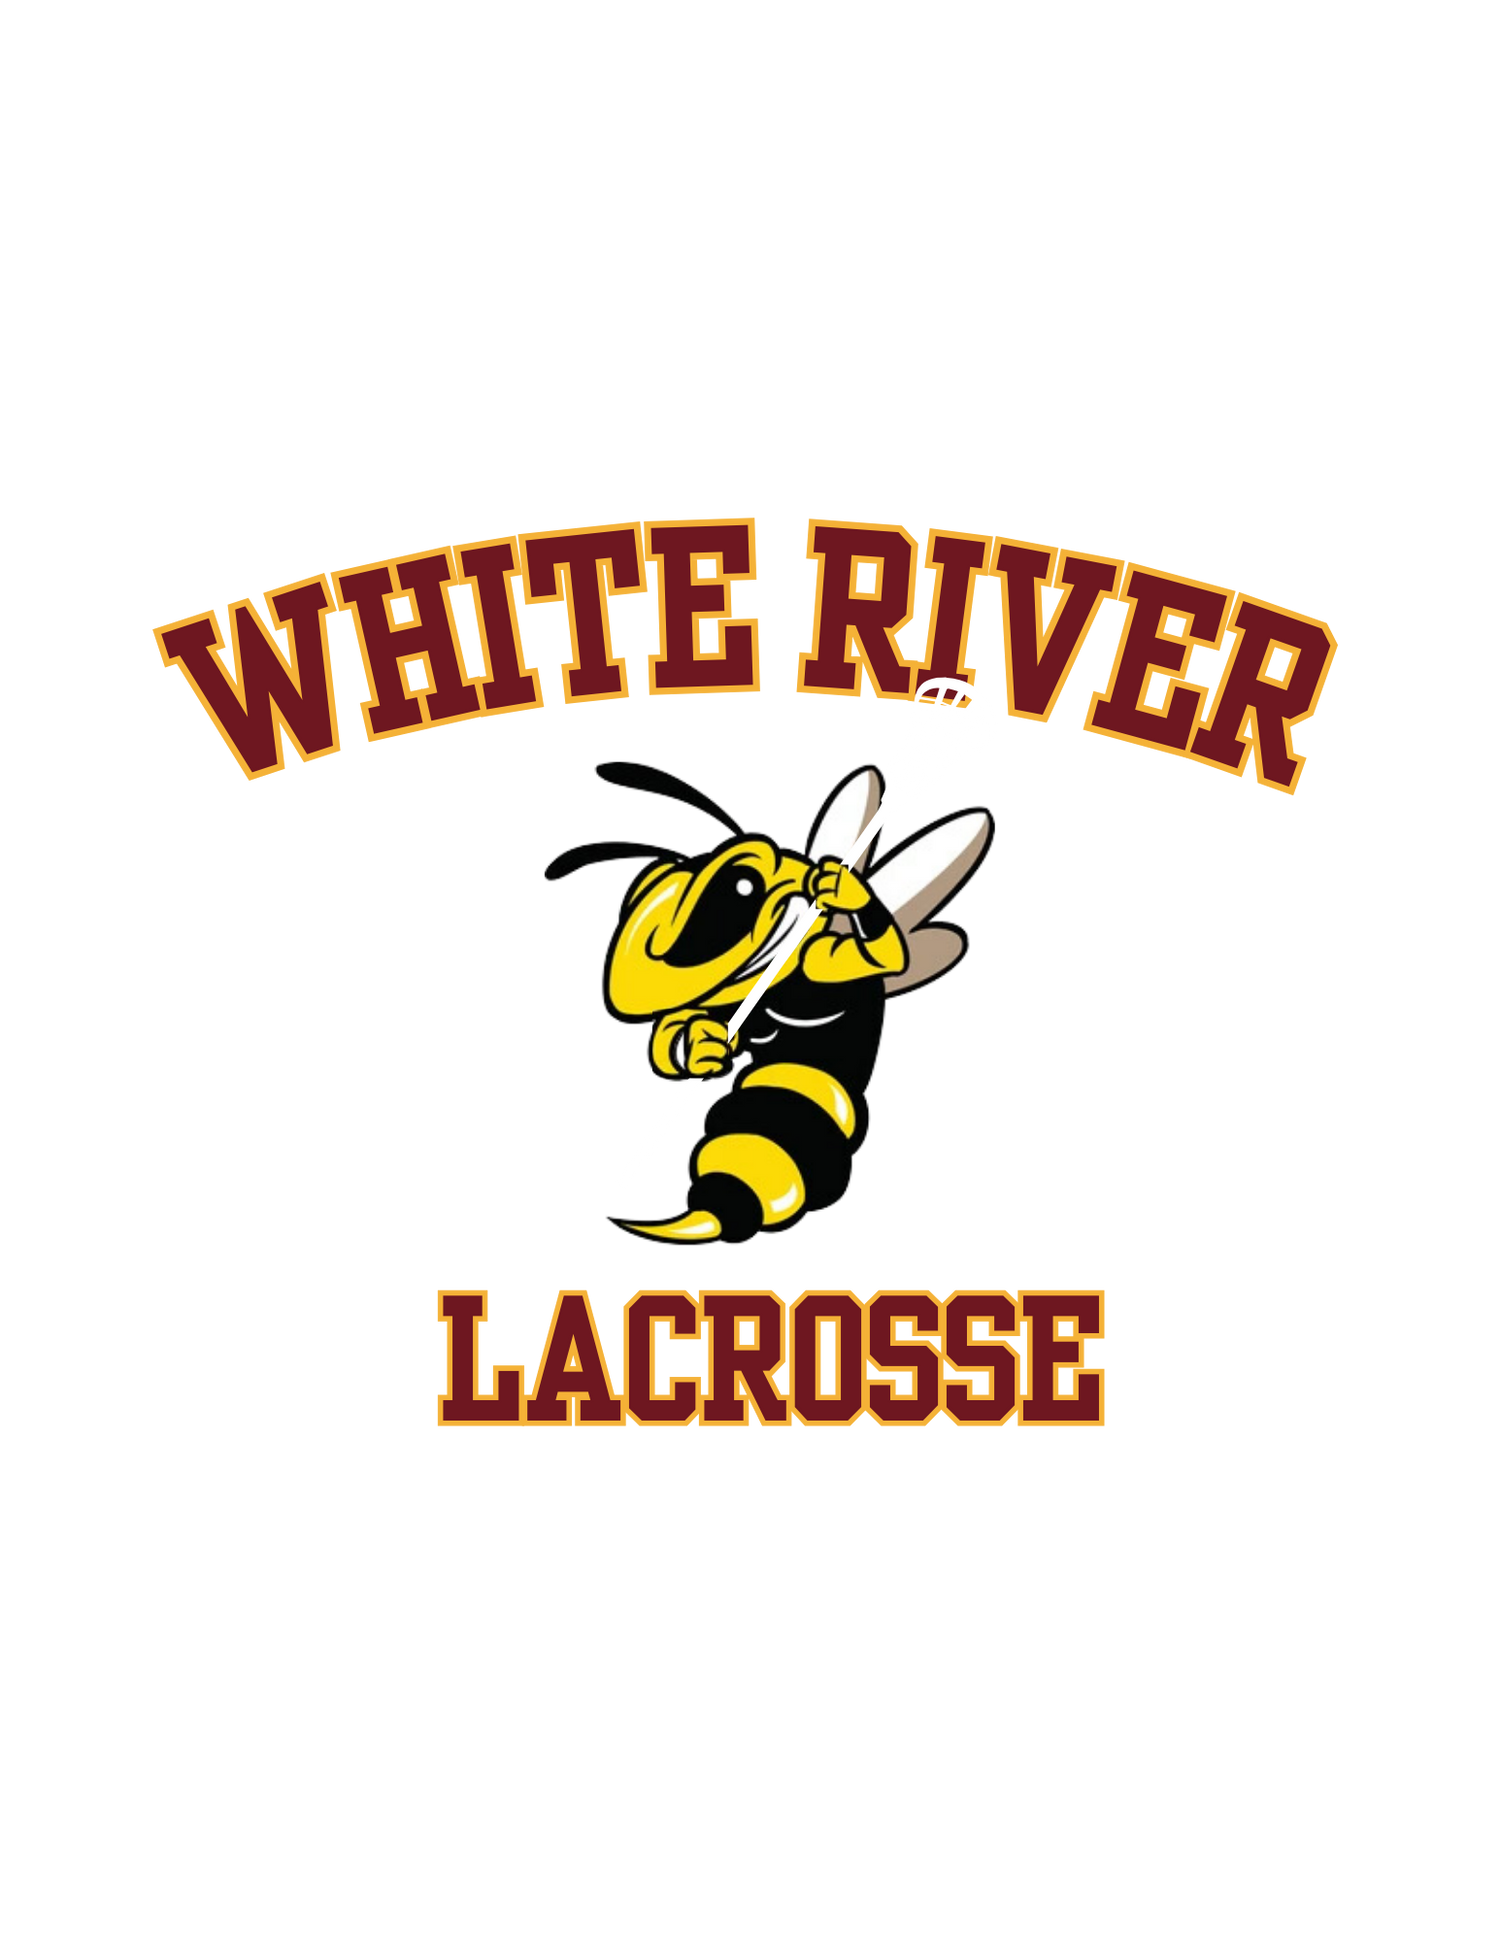 White River Lacrosse